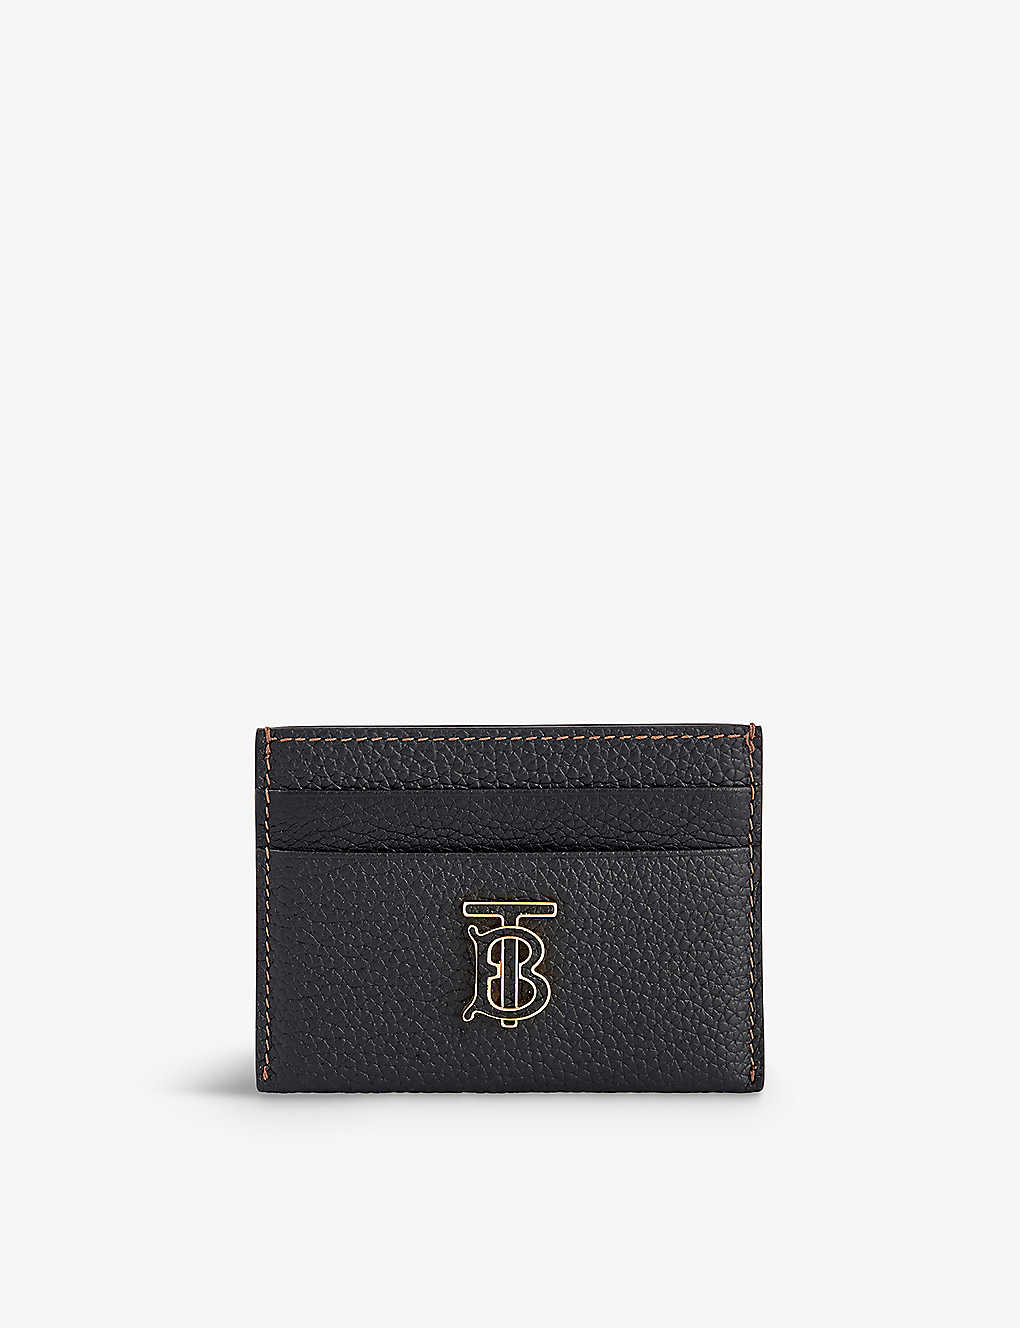 Burberry Black Brand-plaque Leather Card Holder